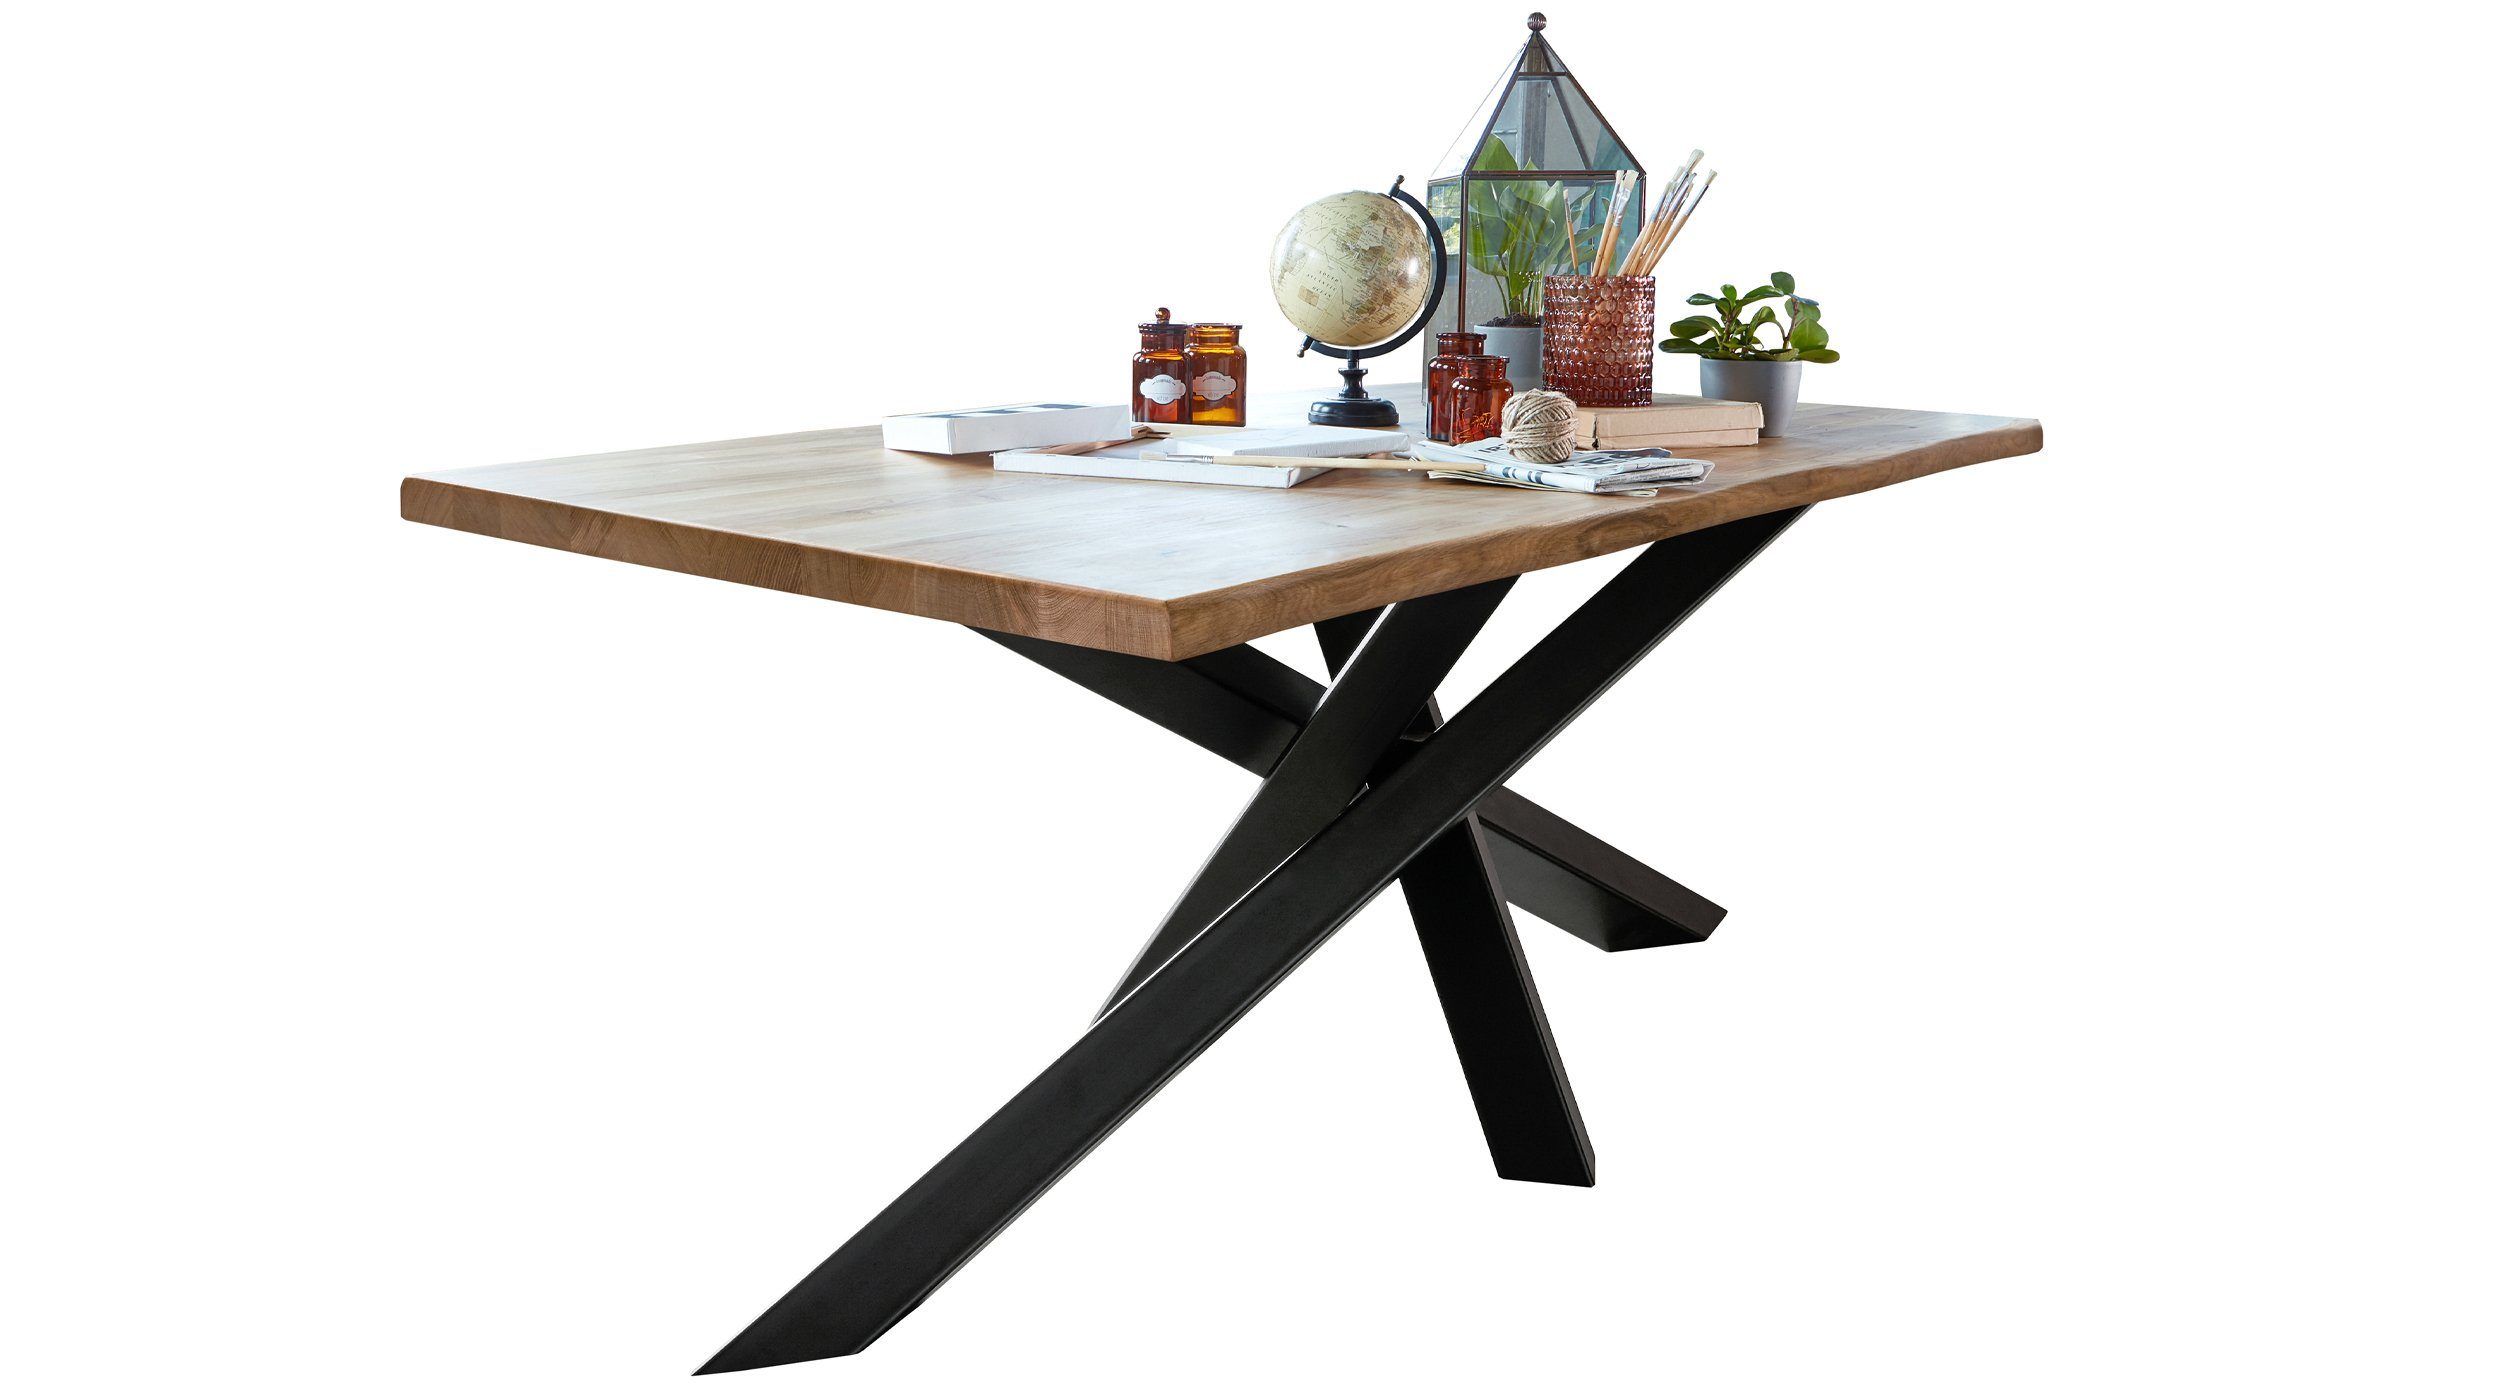 Massivart® Baumkantentisch ANDO / 200 x 100 cm / Wildeiche massiv geölt, 40 mm Tischplattenstärke / Gestell Metall schwarz lackiert